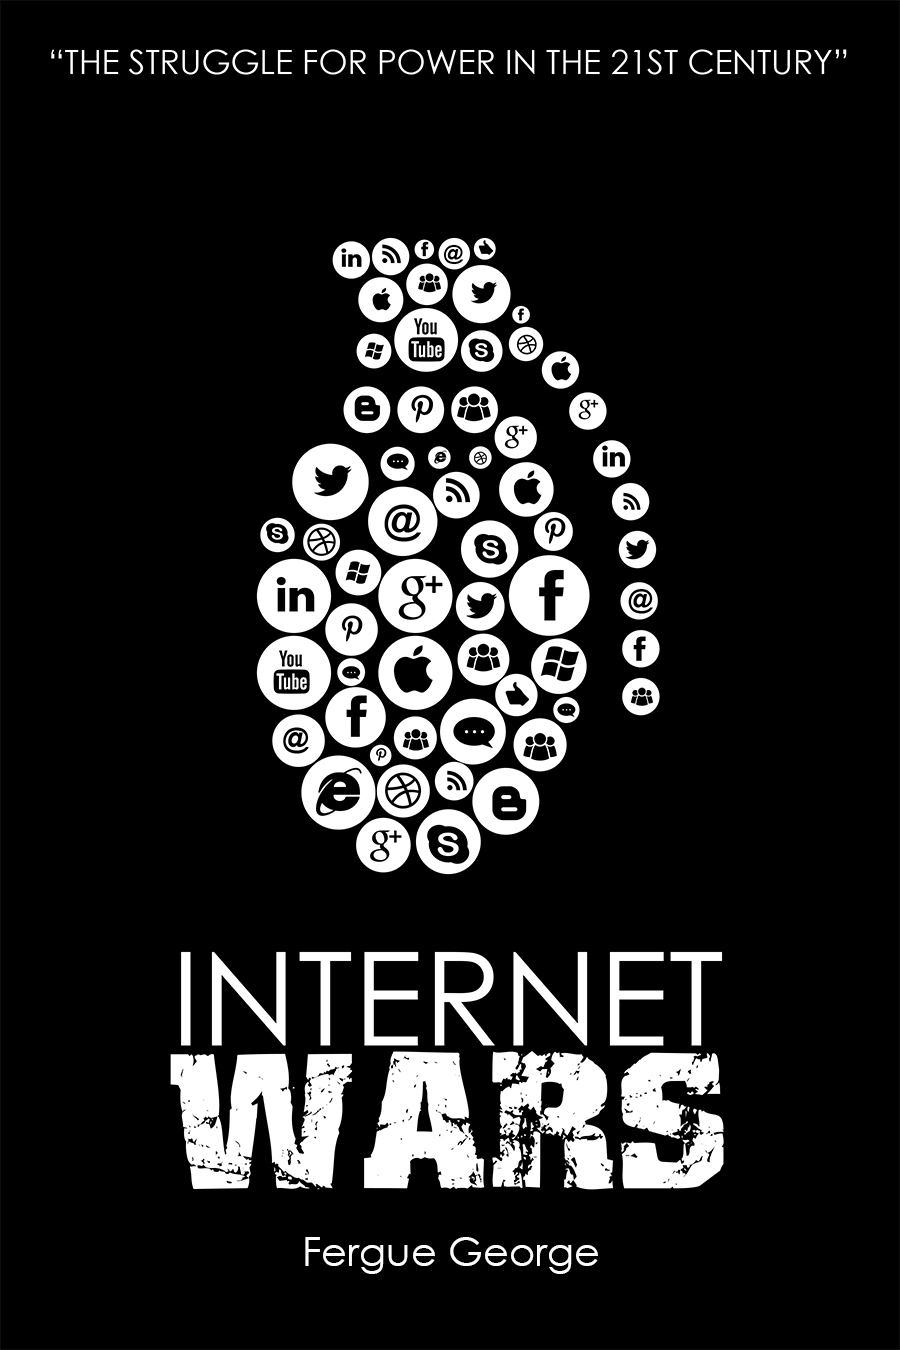 book cover design Internet War military power economic political SHIFT Arslan Janjua